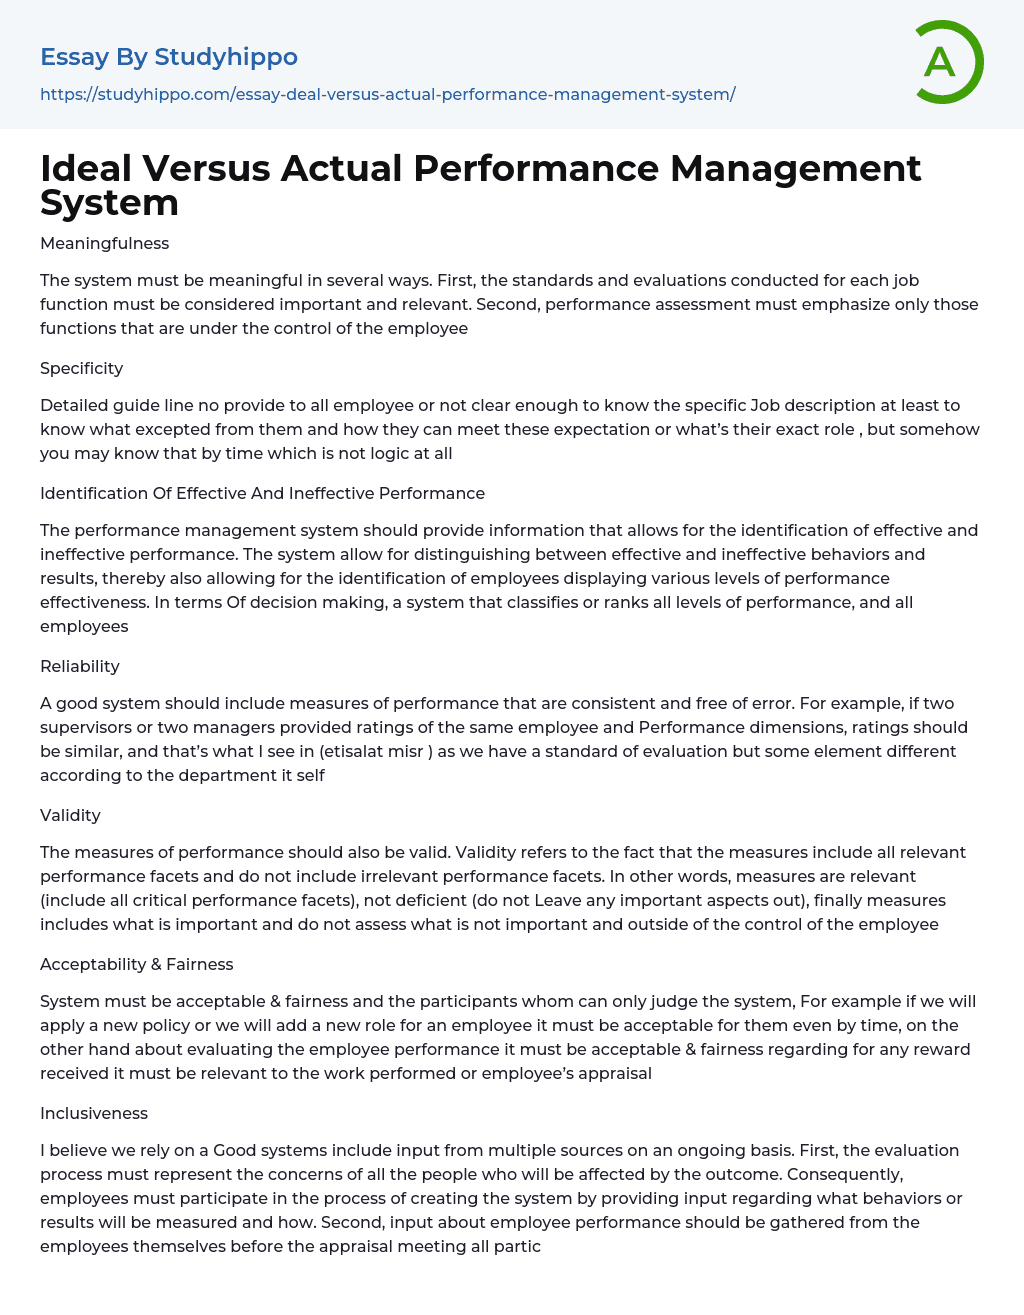 Ideal Versus Actual Performance Management System Essay Example